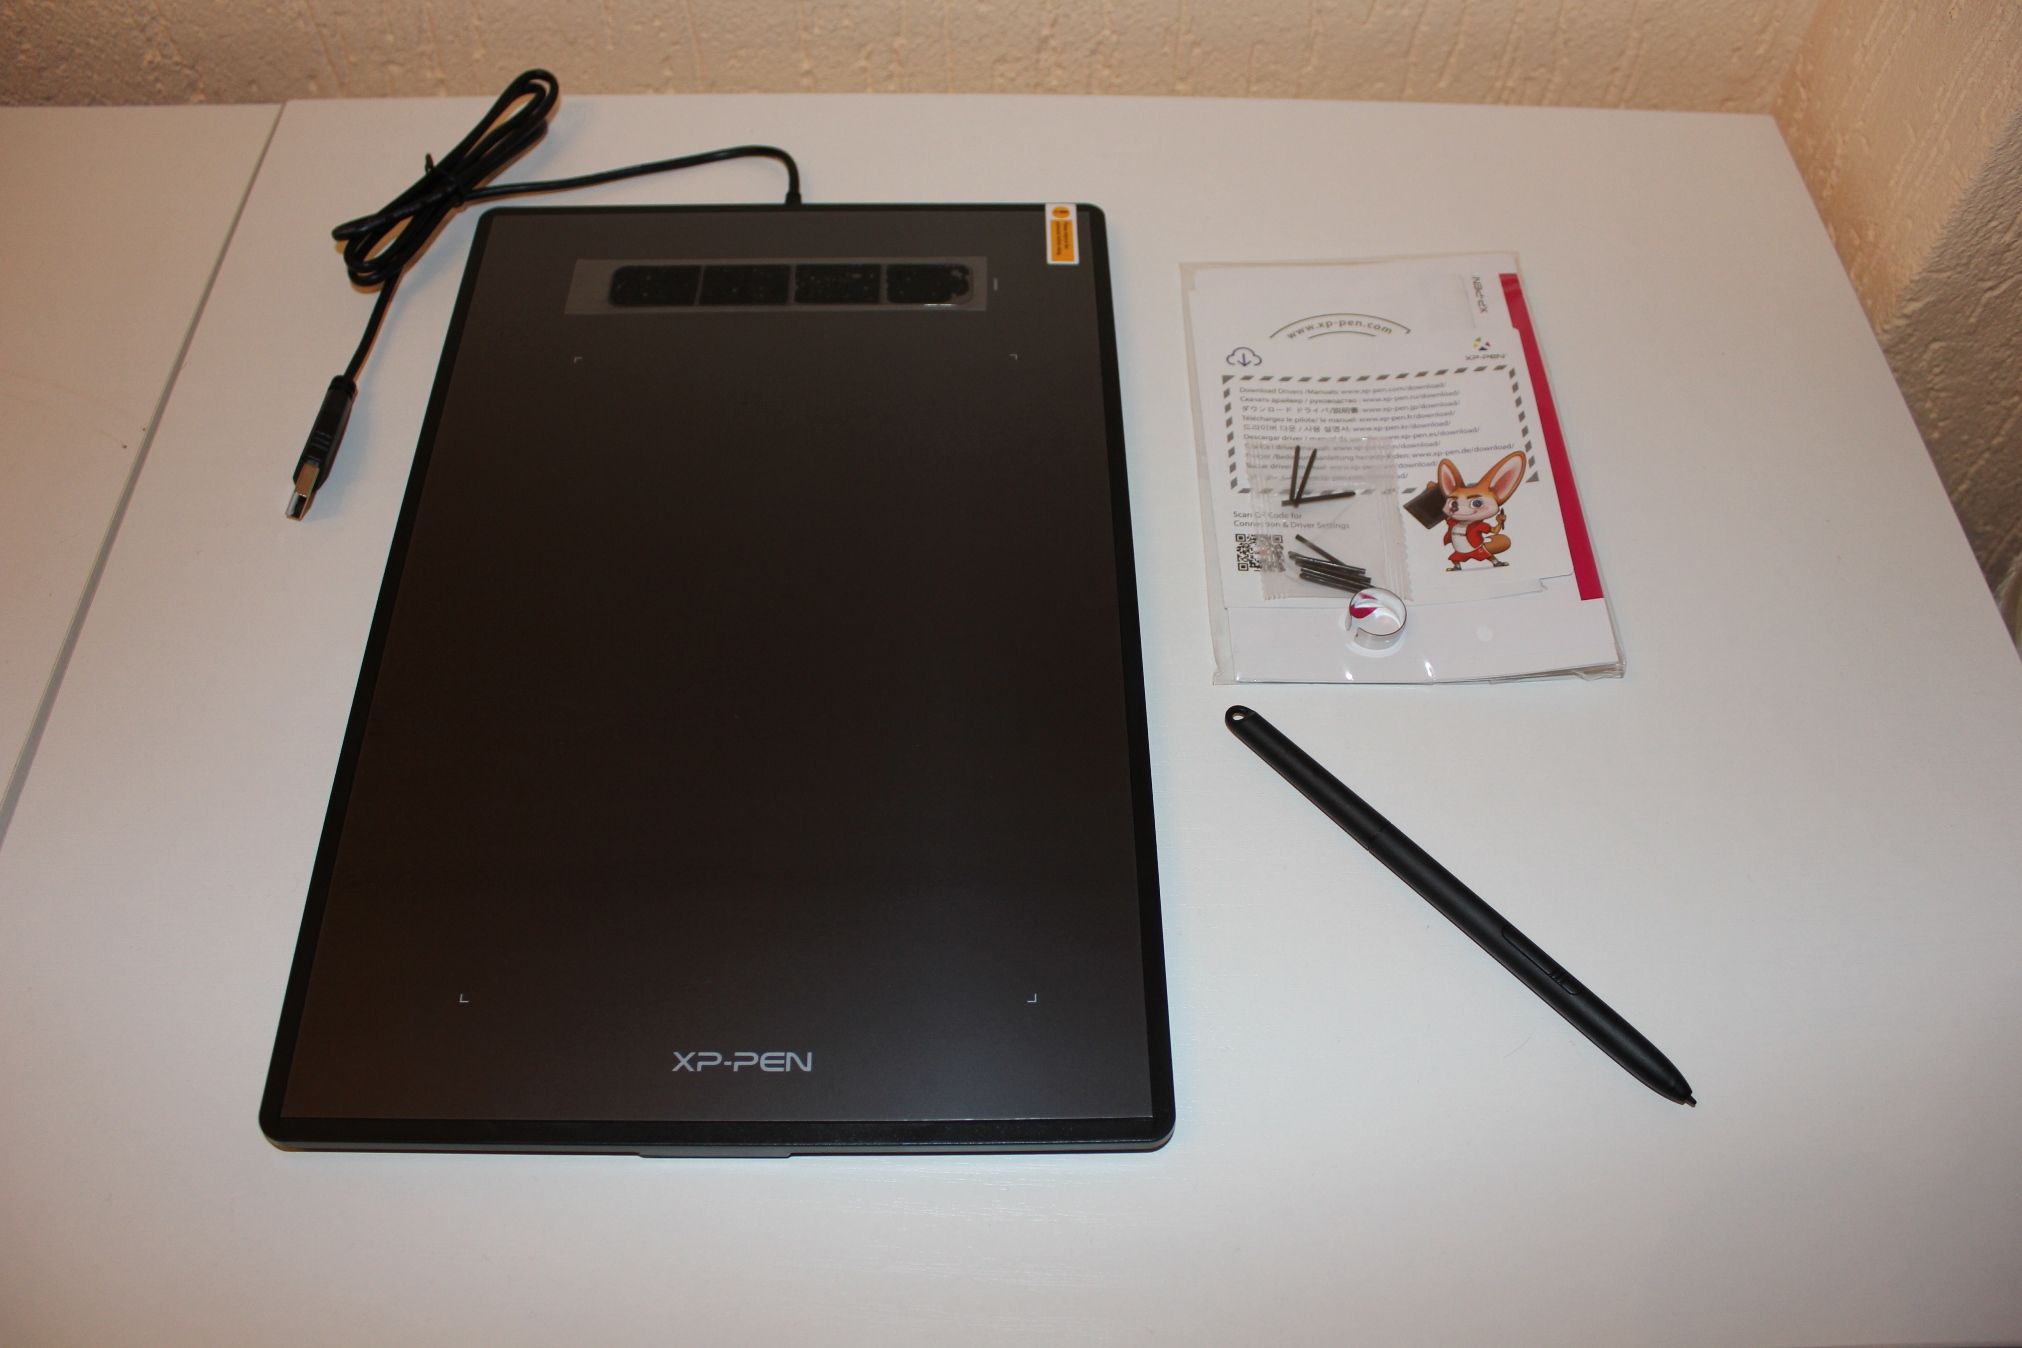 Pen star g960. XP-Pen Star g960. Графический планшет XP-Pen g960. Графический планшет XP Pen Star 960. Графический планшет XPPEN Star g4305.